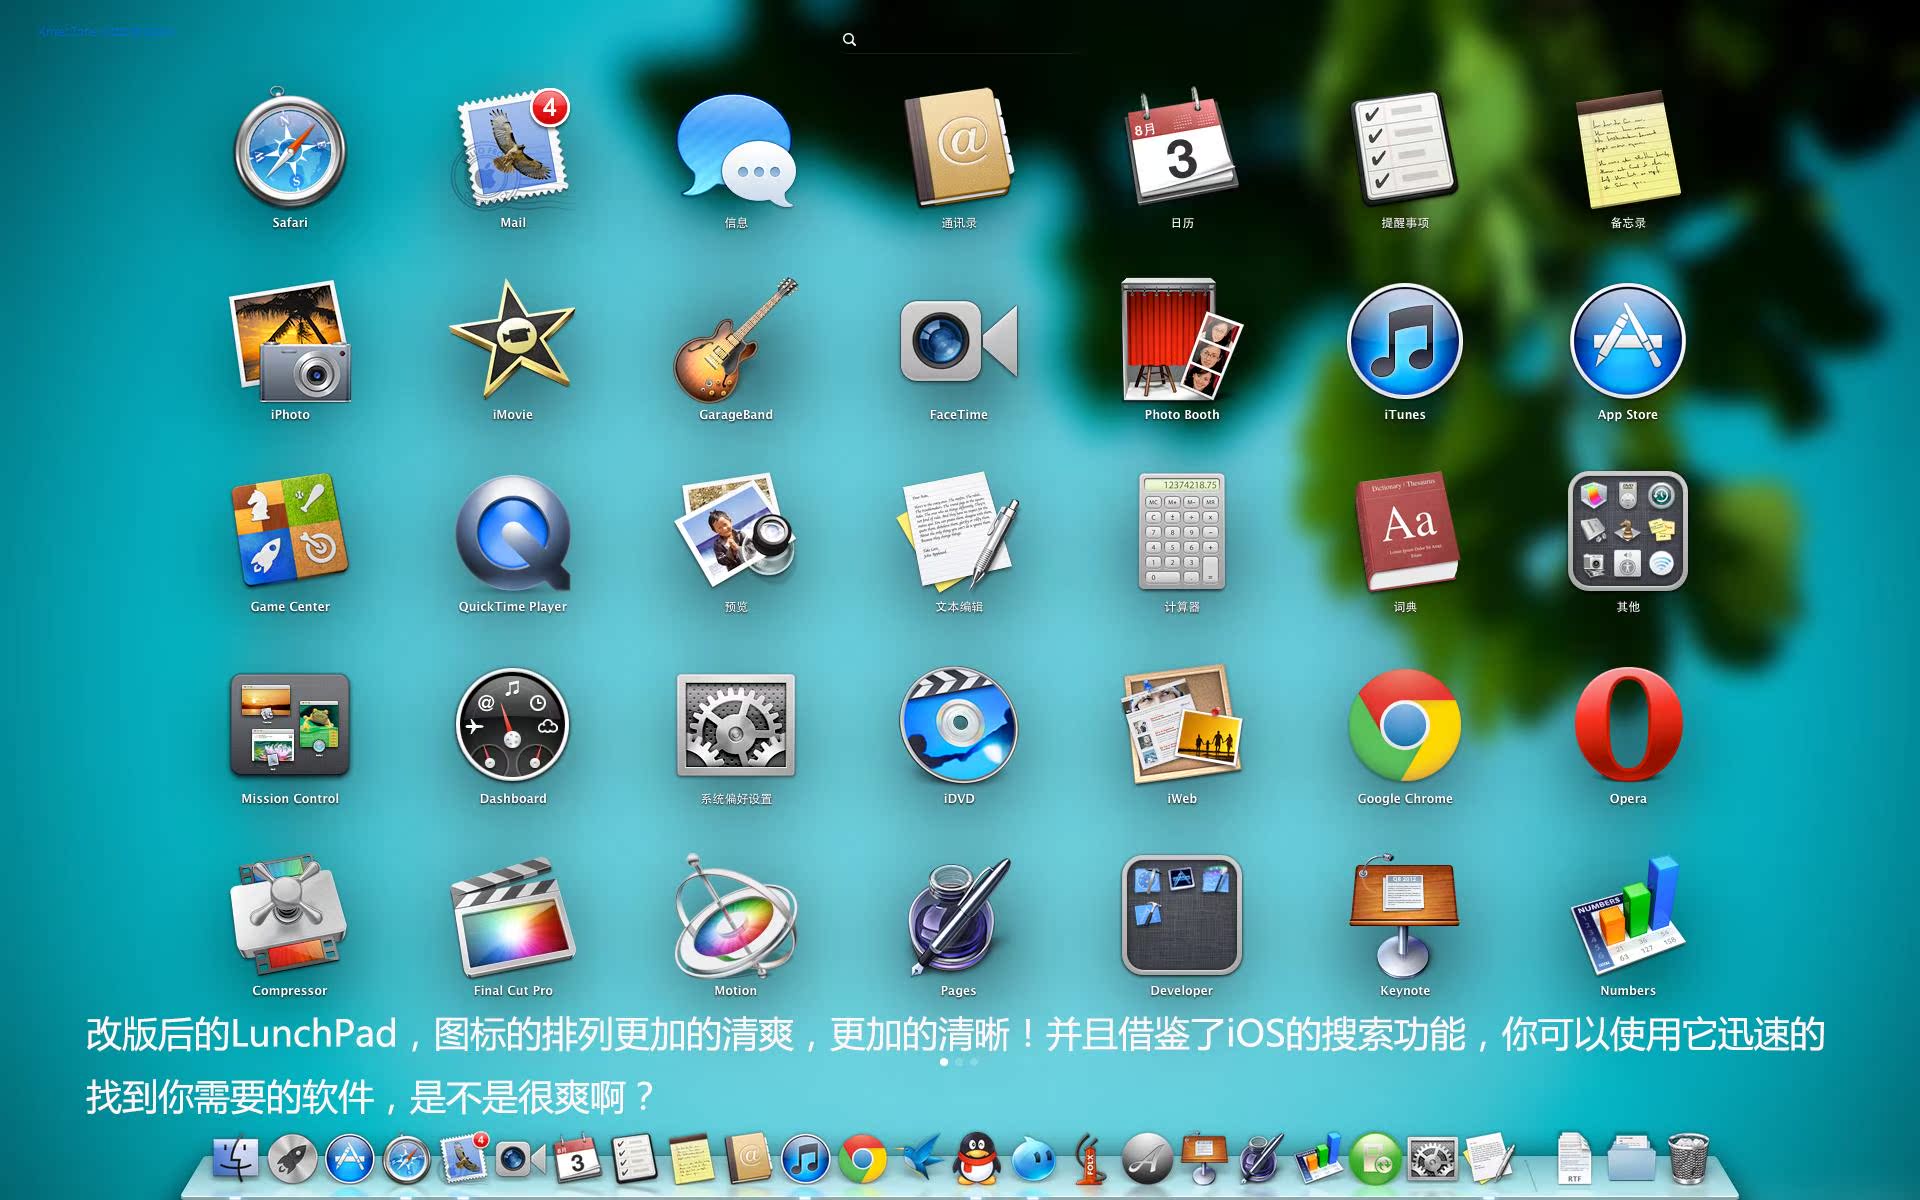 PC安装OS X 10.8.5 黑苹果傻瓜式安装U盘 黑狮